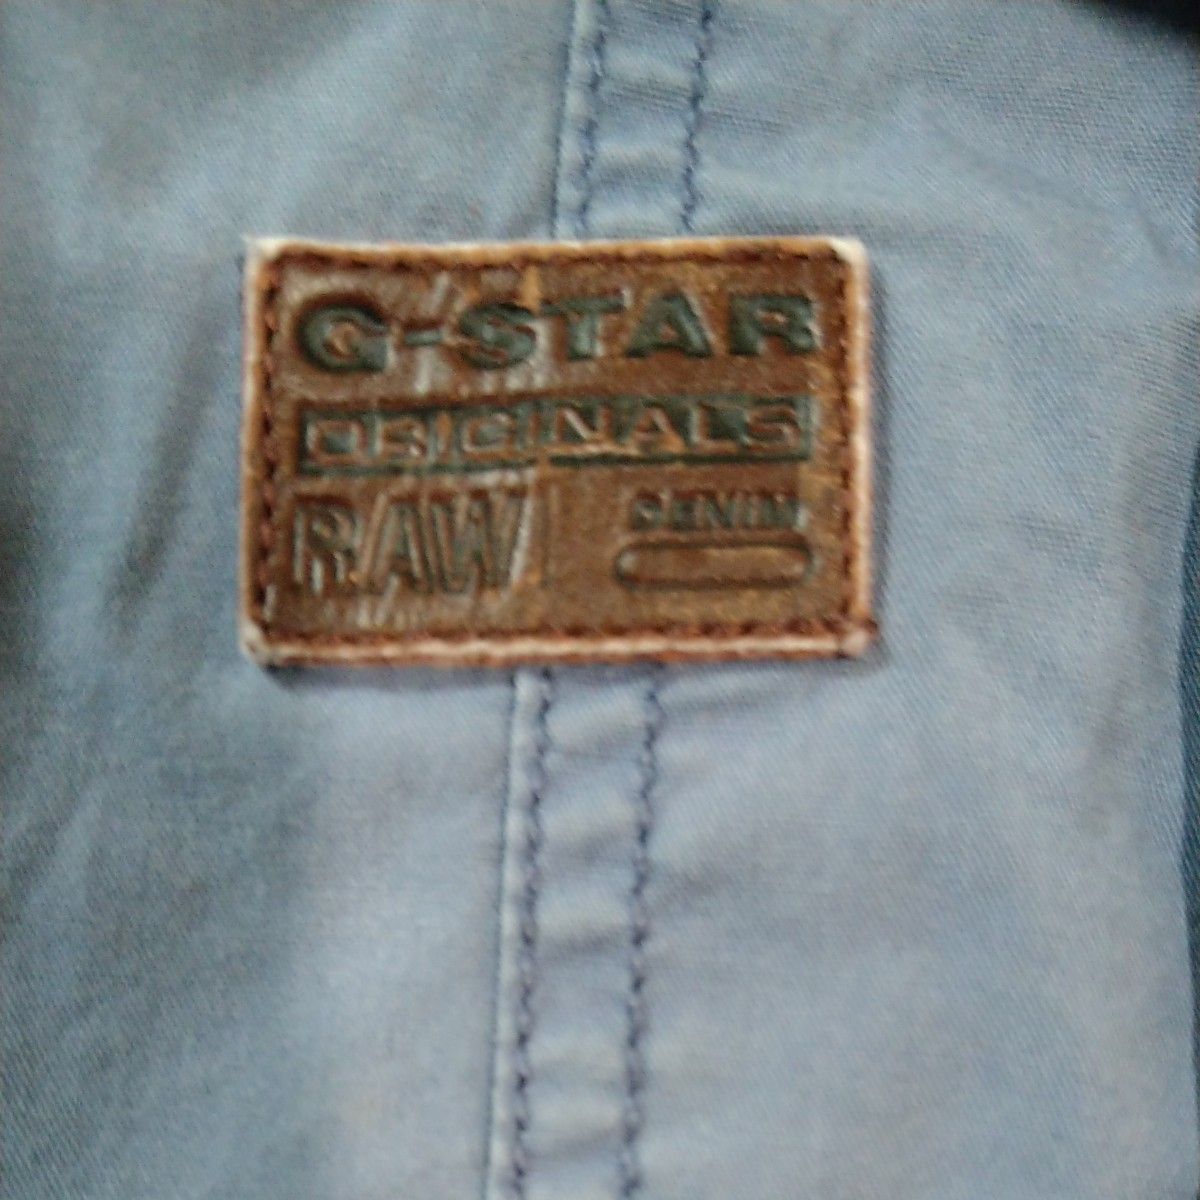 G-STAR RAW  半袖シャツ